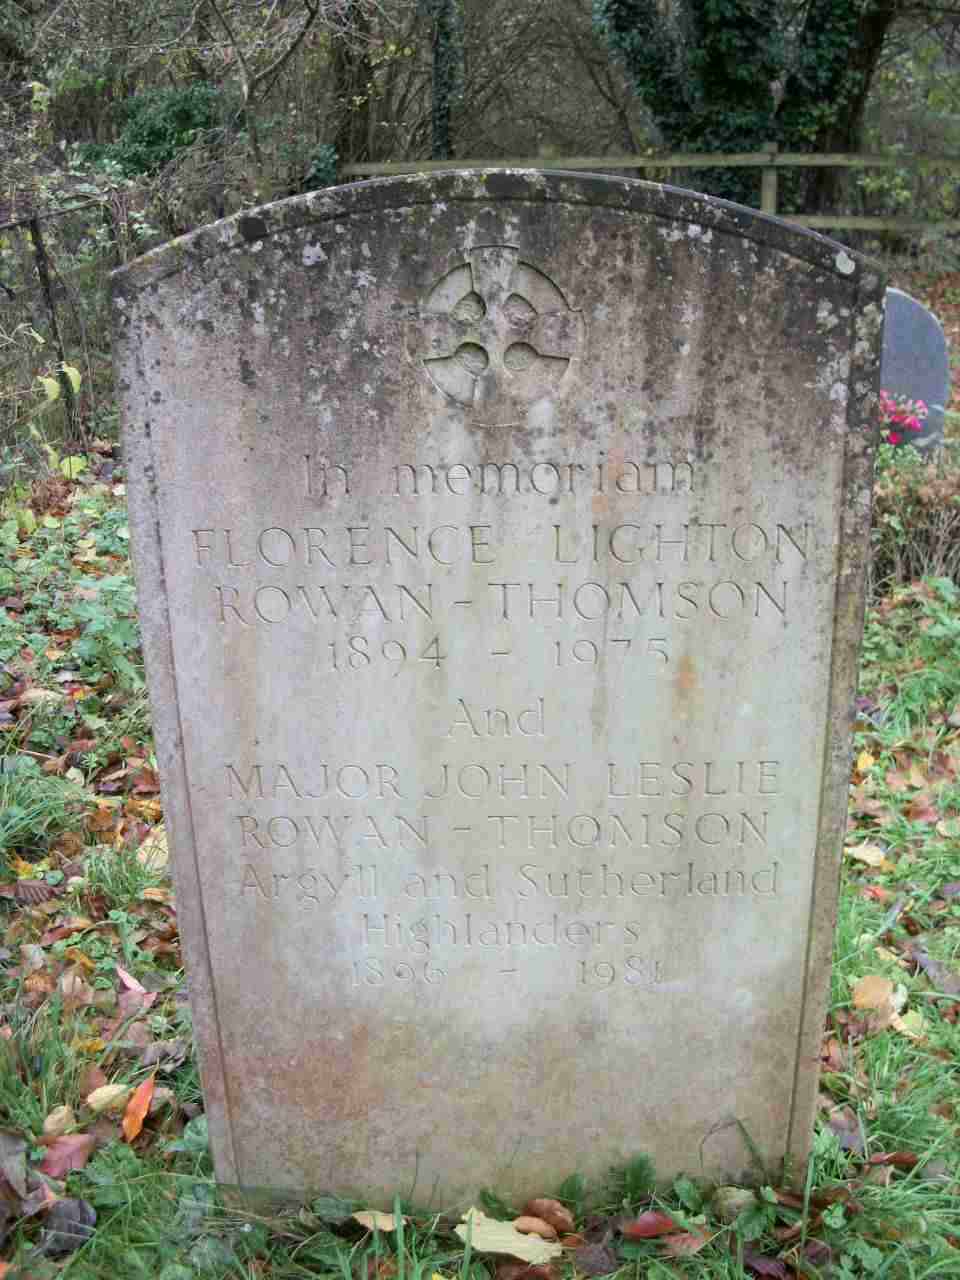 Headstone of John Leslie Rowan-Thomson and Florence Lighton Stubbs